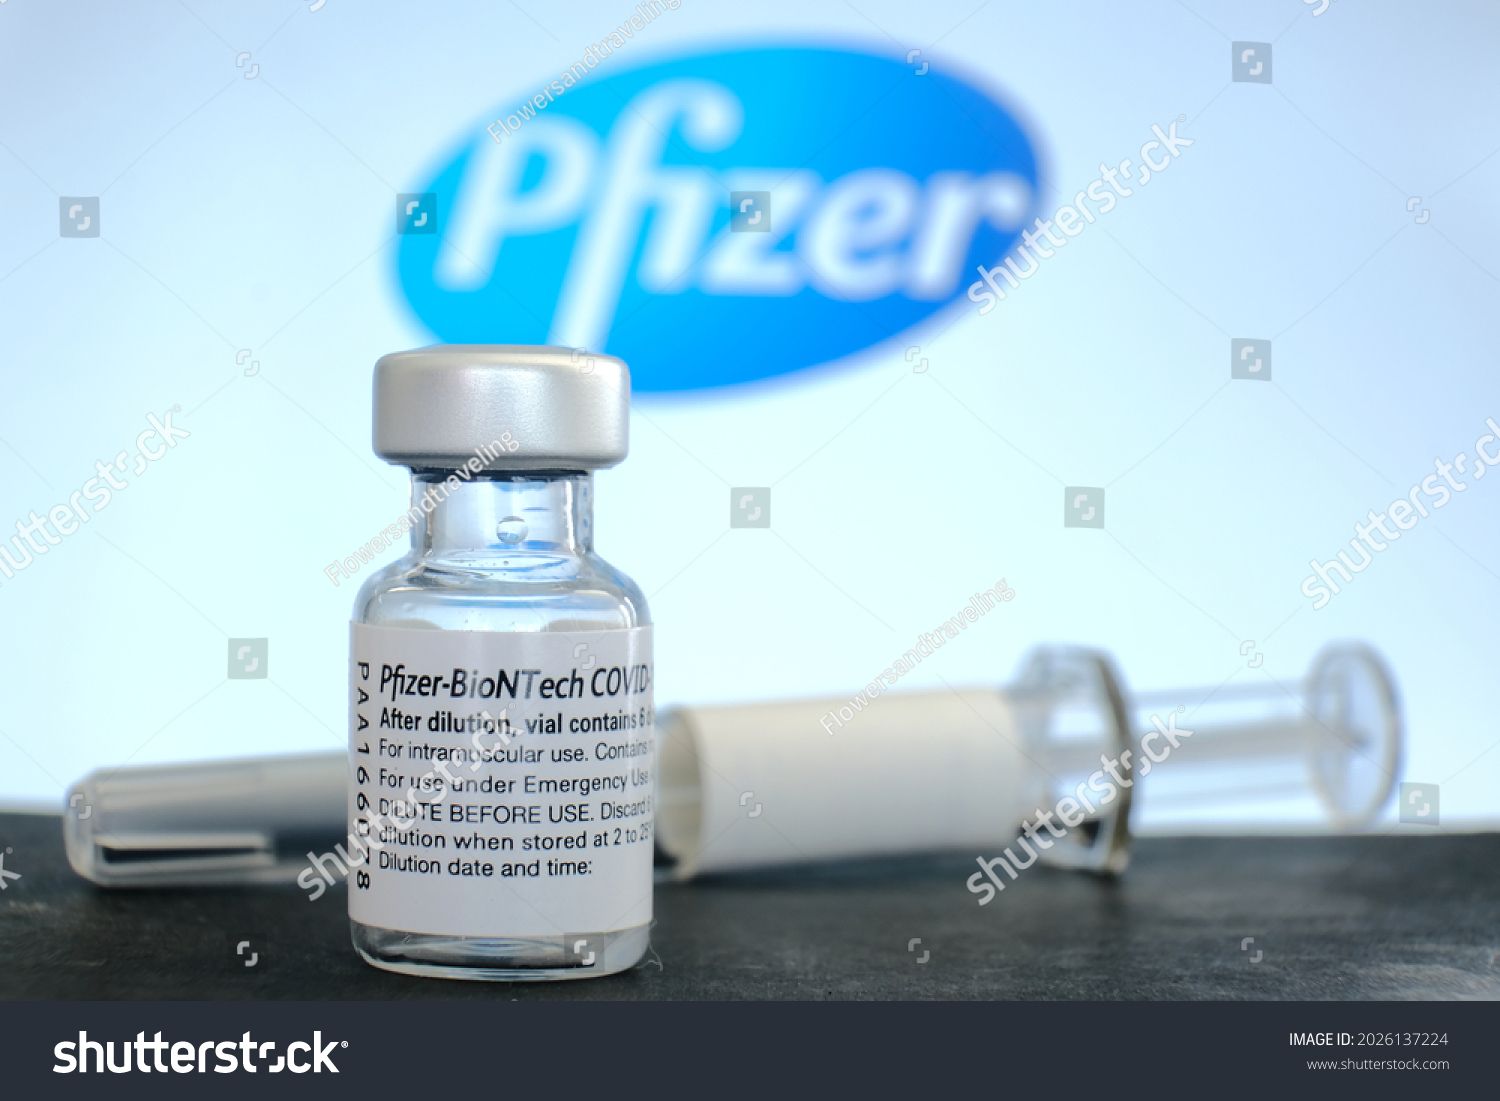 vaccine technology:वैक्सीन की टेक्नोलॉजी पर विवाद, Moderna ने Pfizer पर लगाया चोरी का आरोप; मुकदमा दर्ज